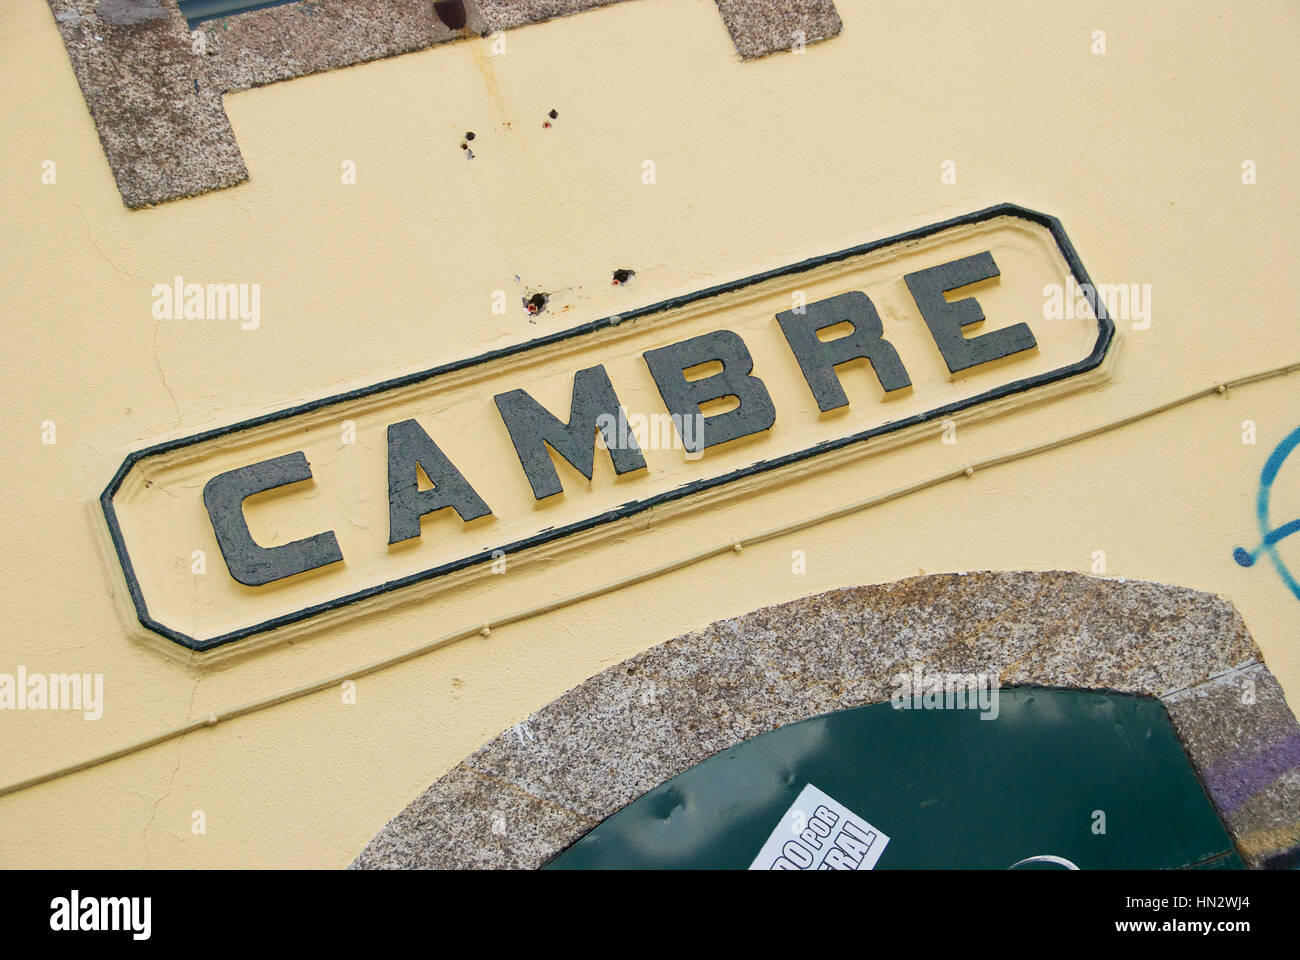 Cambre, A Coruna province, Galicia, Spain. Stock Photo